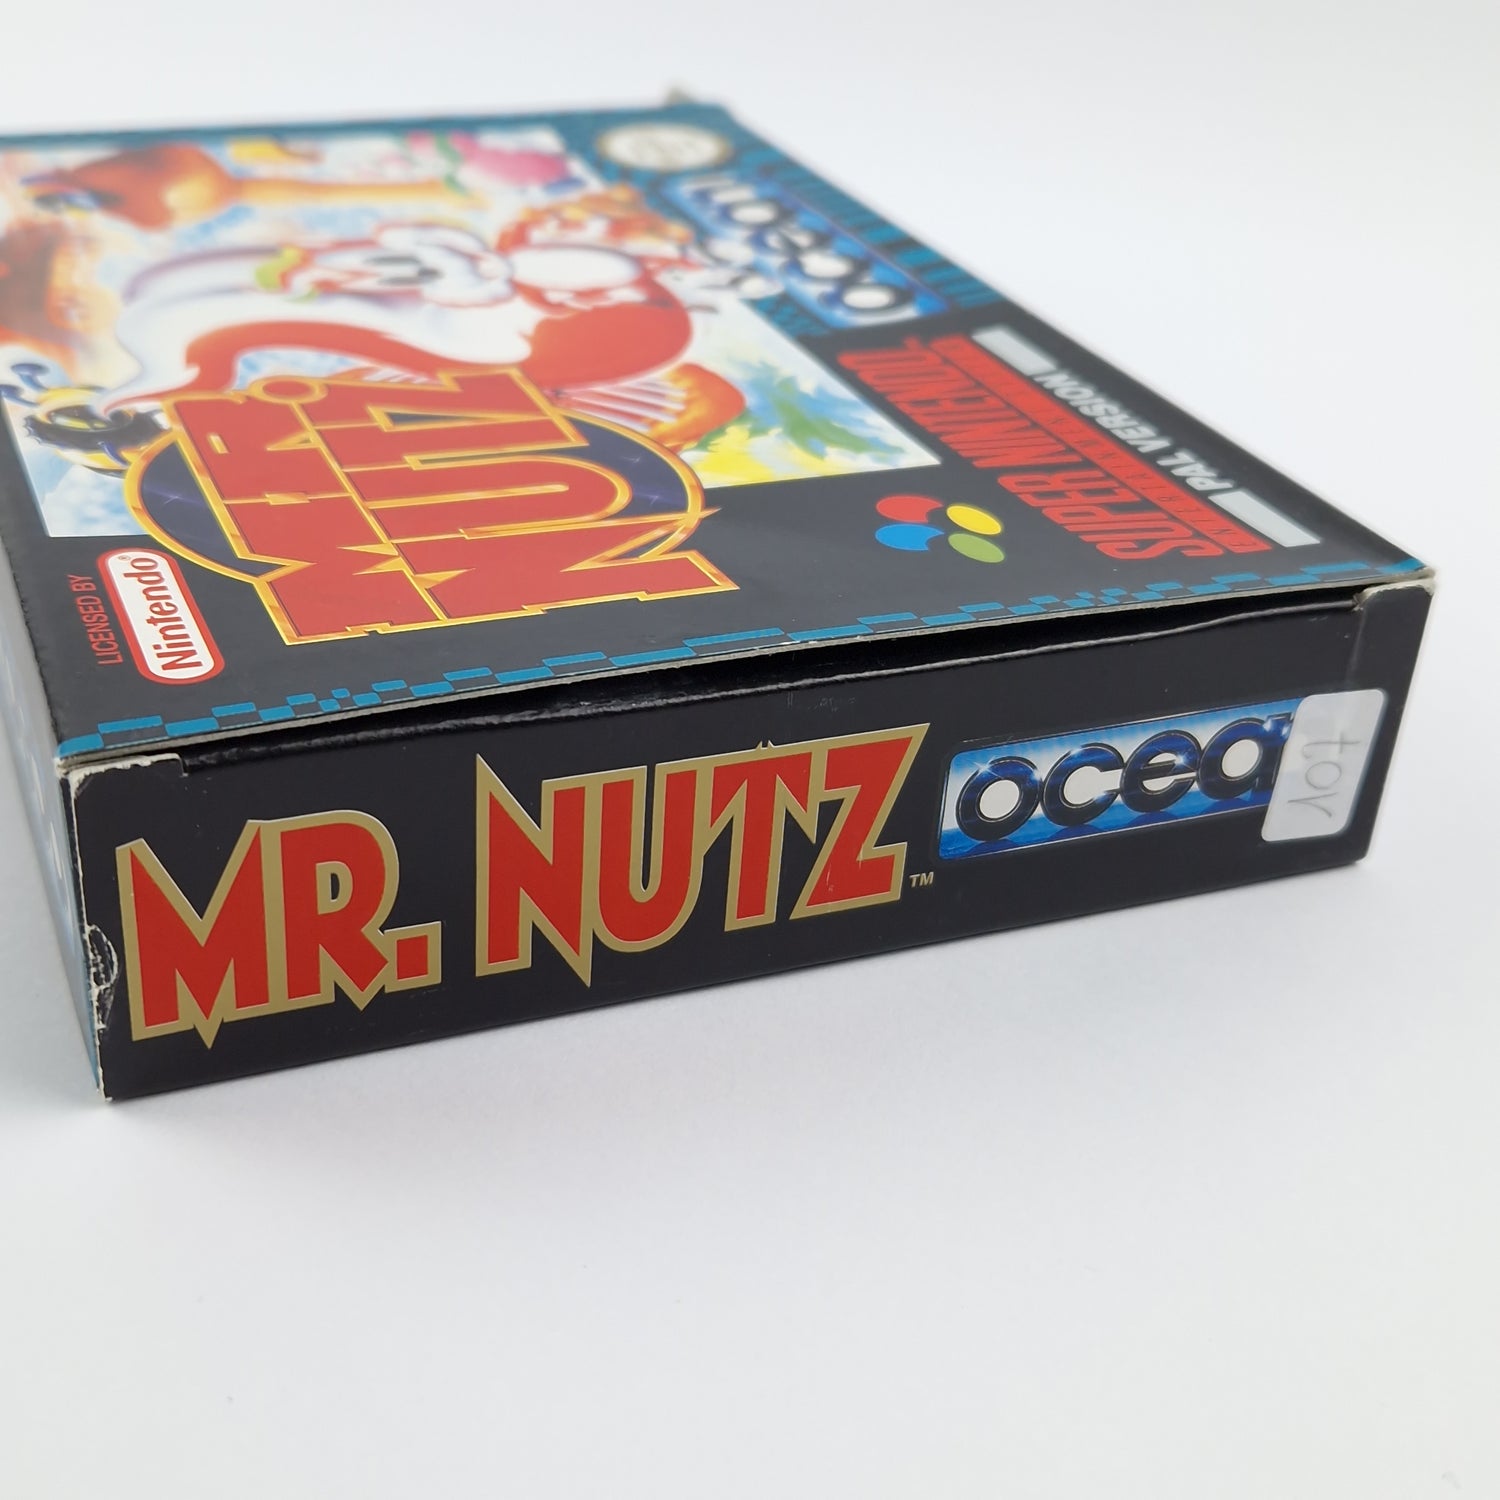 Super Nintendo Spiel : MR. Nutz - Modul Anleitung OVP cib / SNES PAL